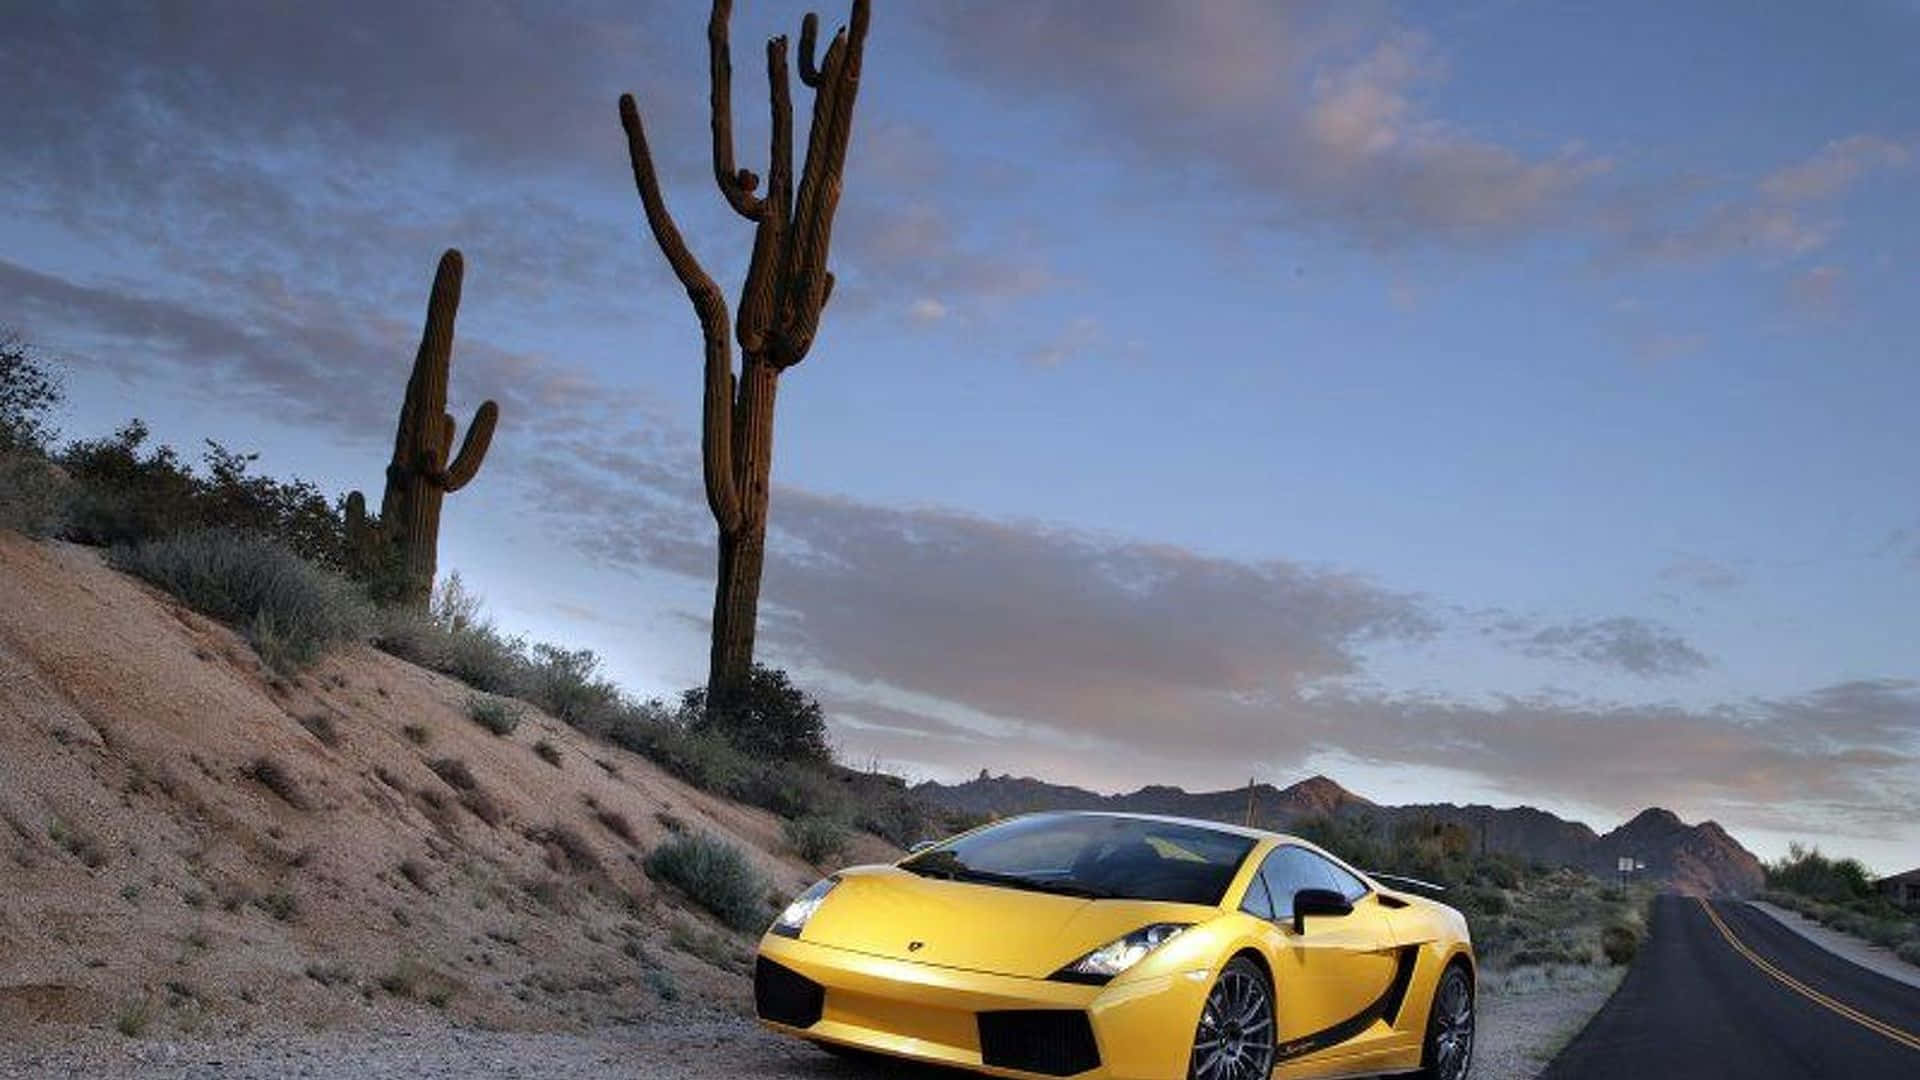 The Sleek and Luxurious Lamborghini Gallardo in Action Wallpaper